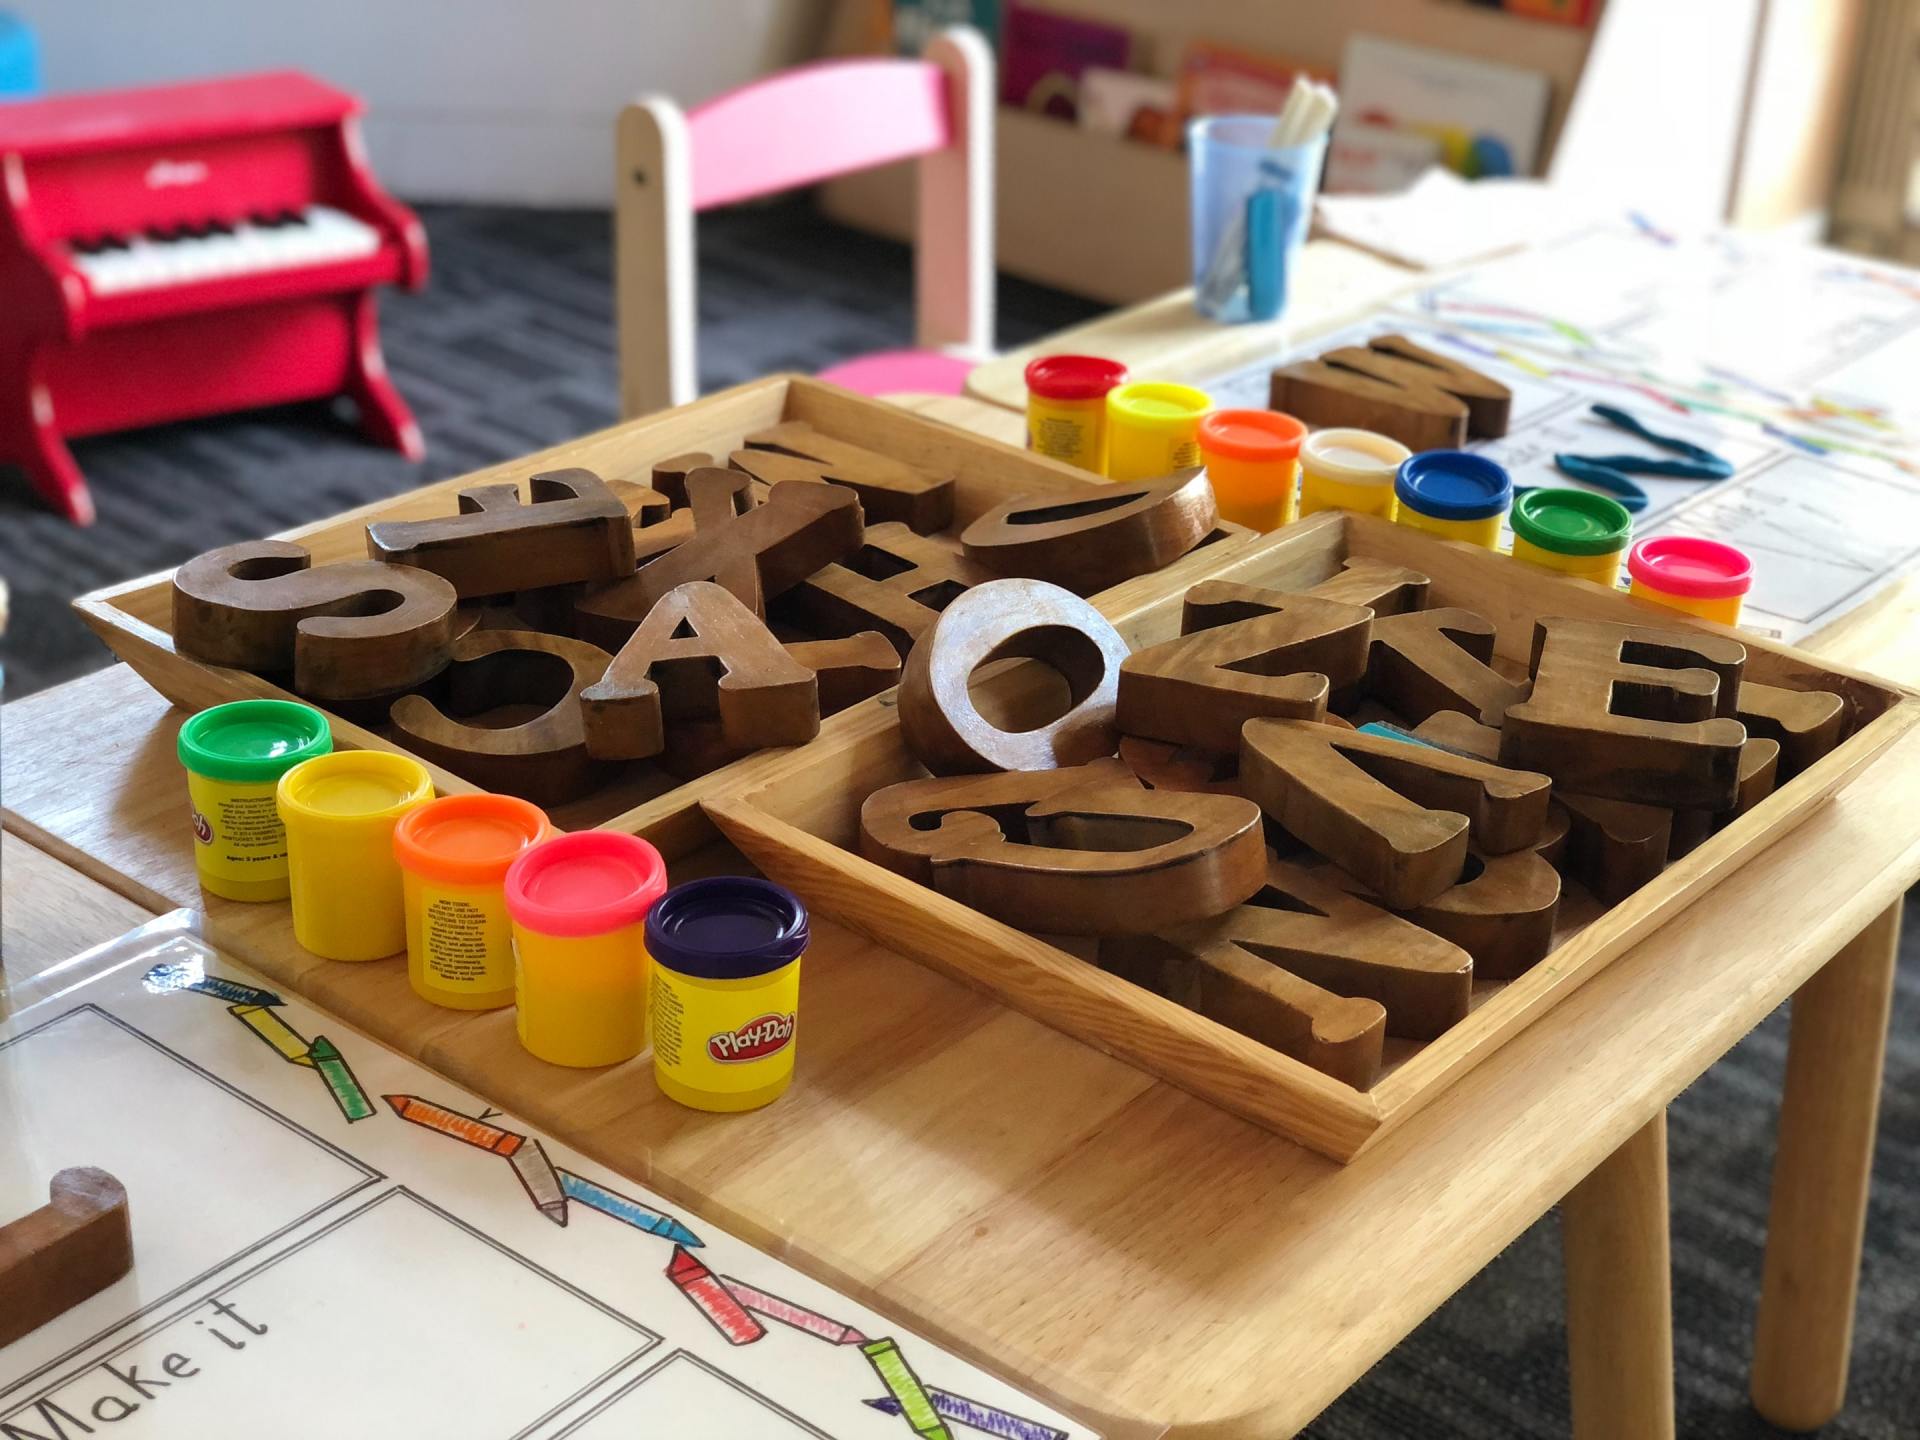 playdough and alphabet letter toys on classroom table